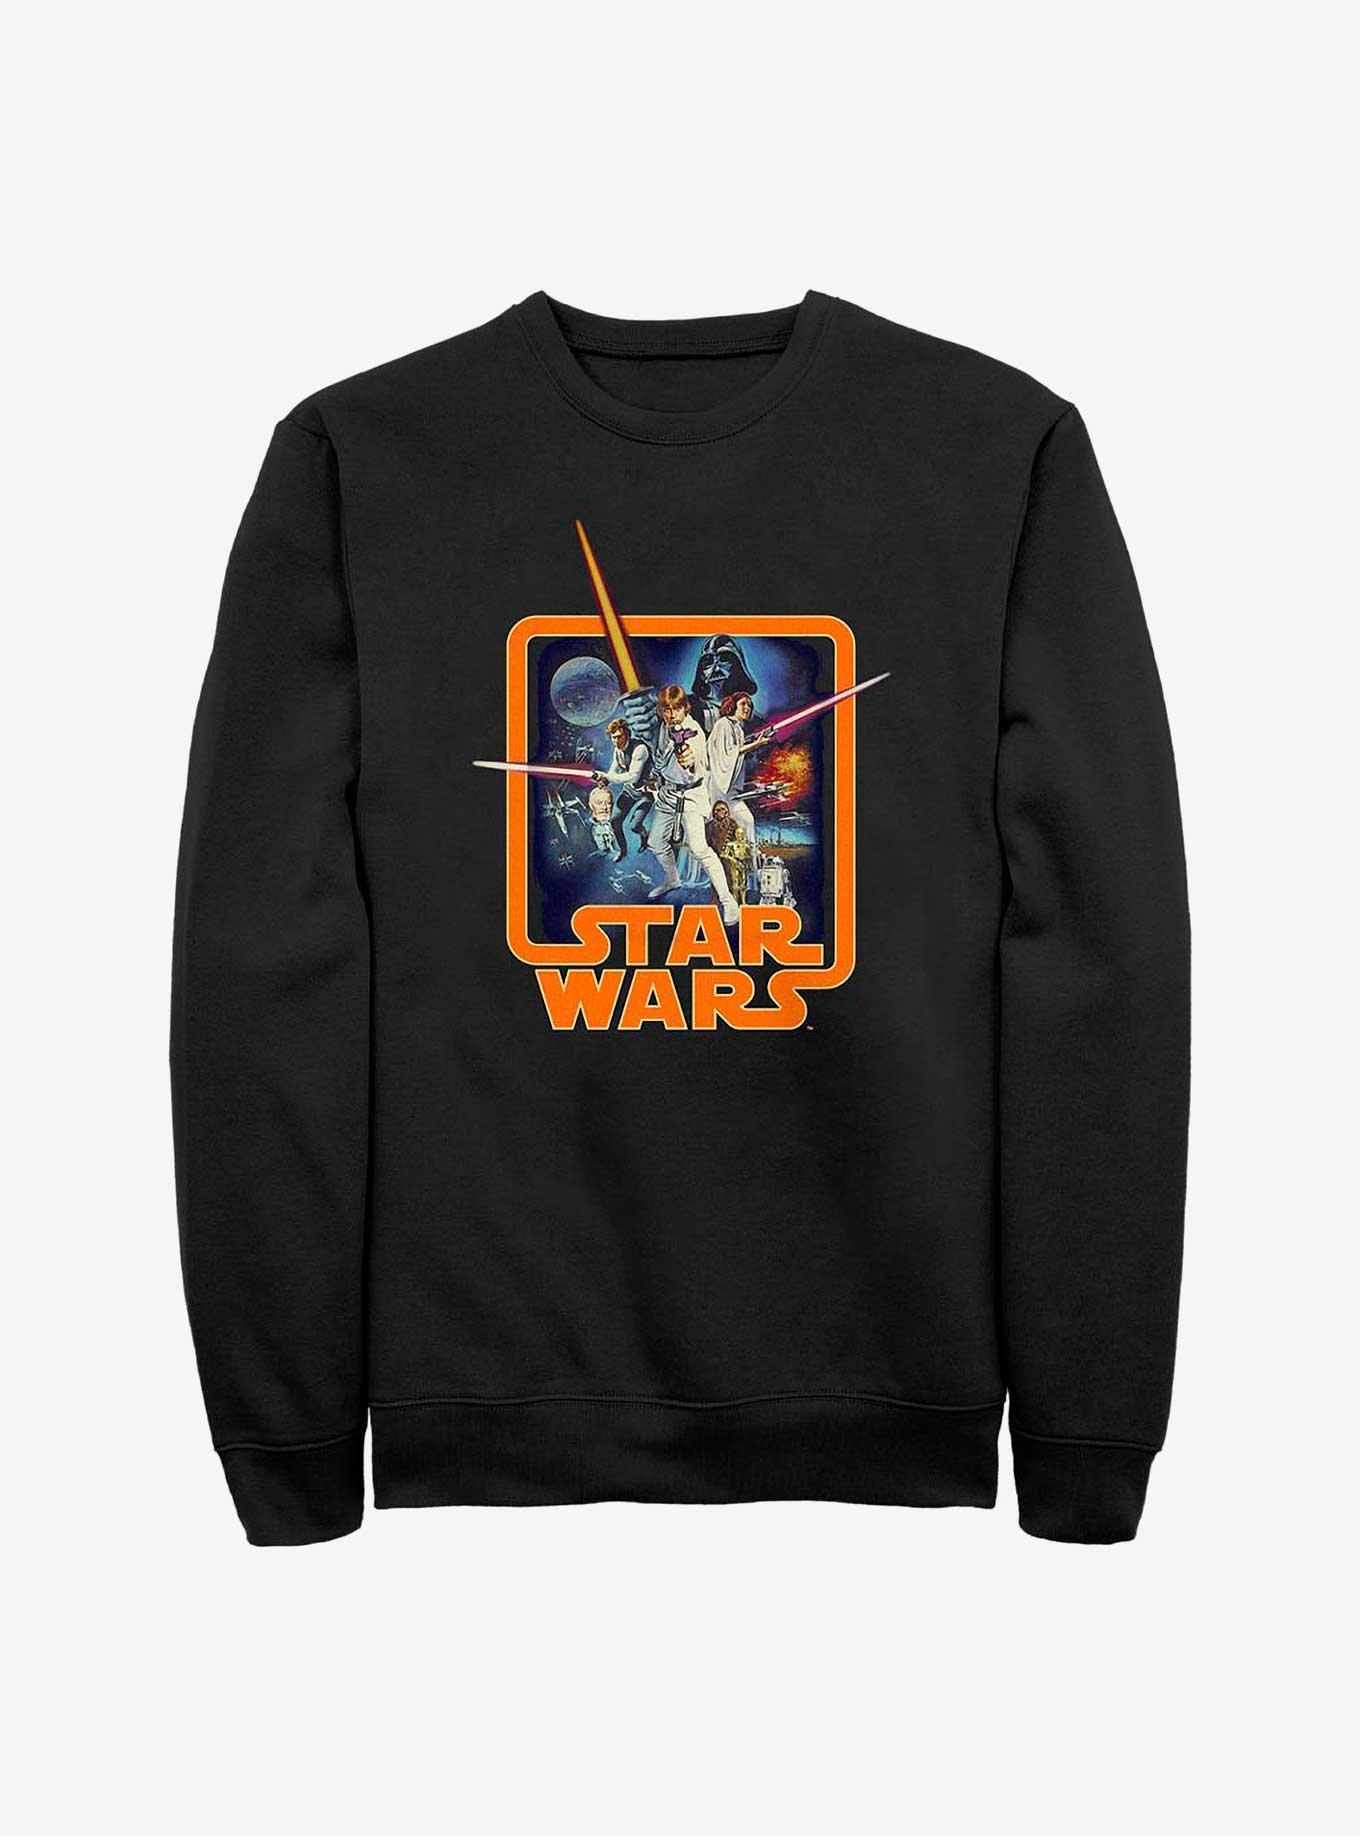 Star Wars Classic Group Sweatshirt, BLACK, hi-res